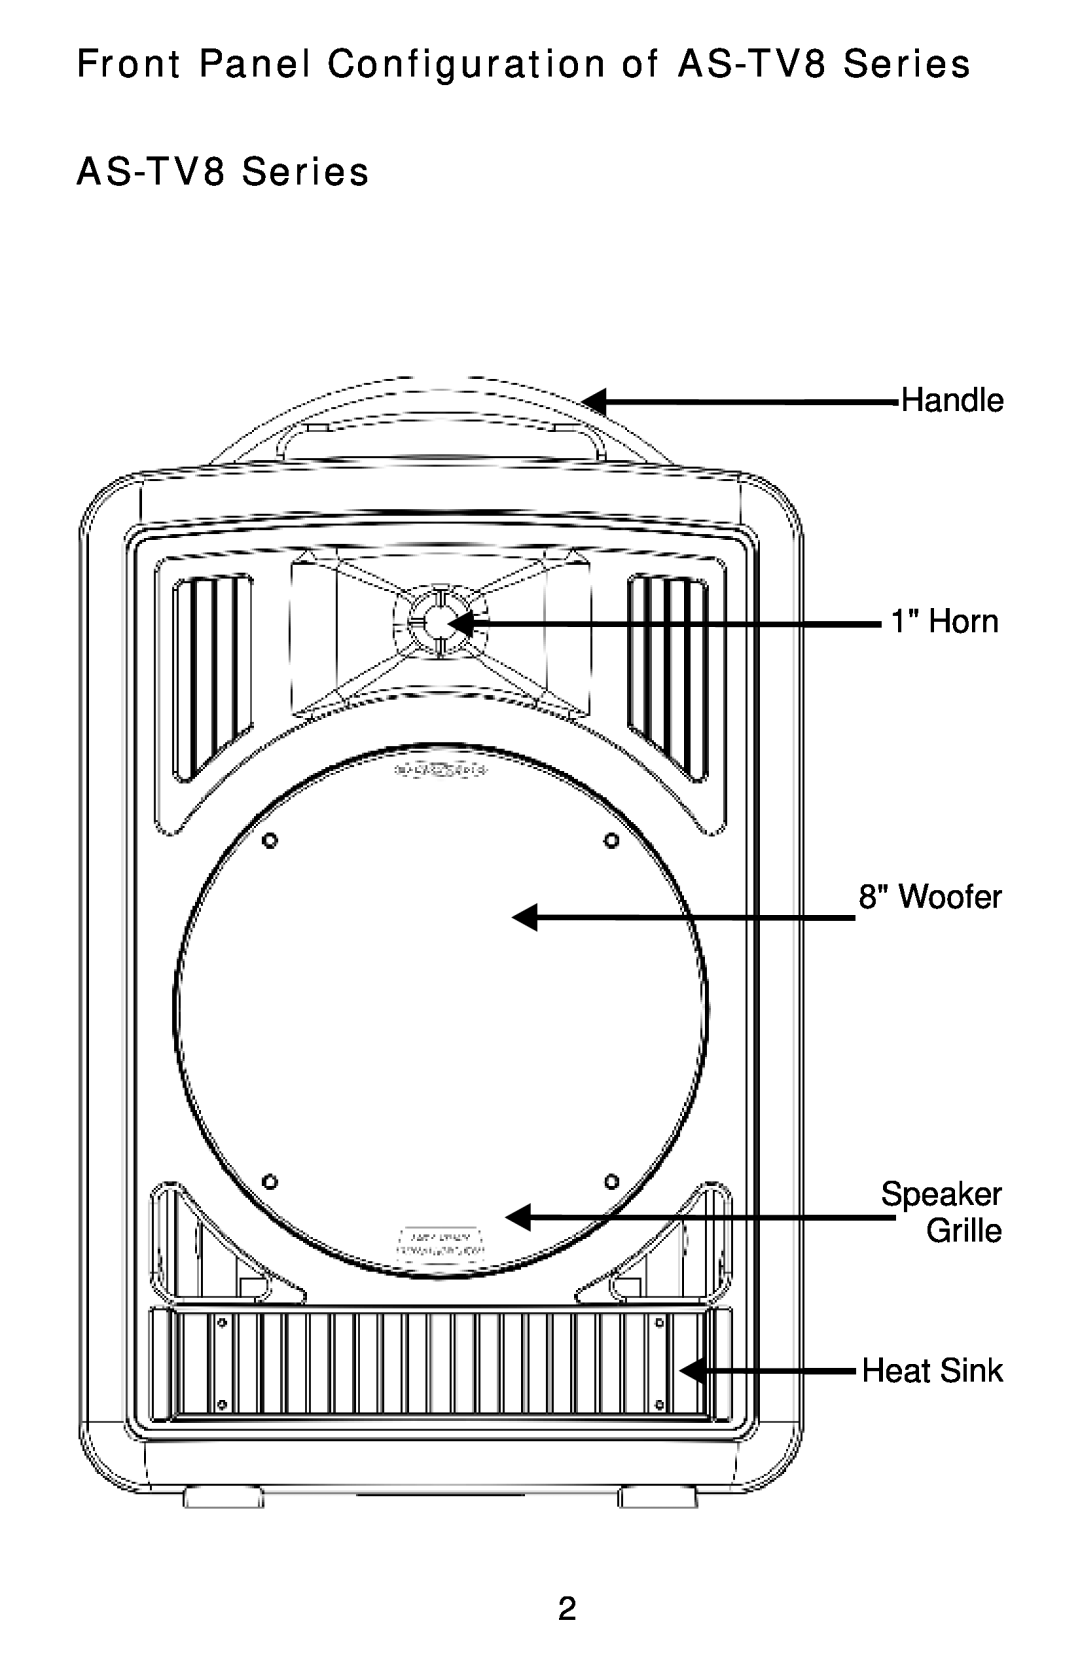 Traveler manual Front Panel Configuration of AS-TV8Series, Handle 1 Horn 8 Woofer Speaker Grille Heat Sink 